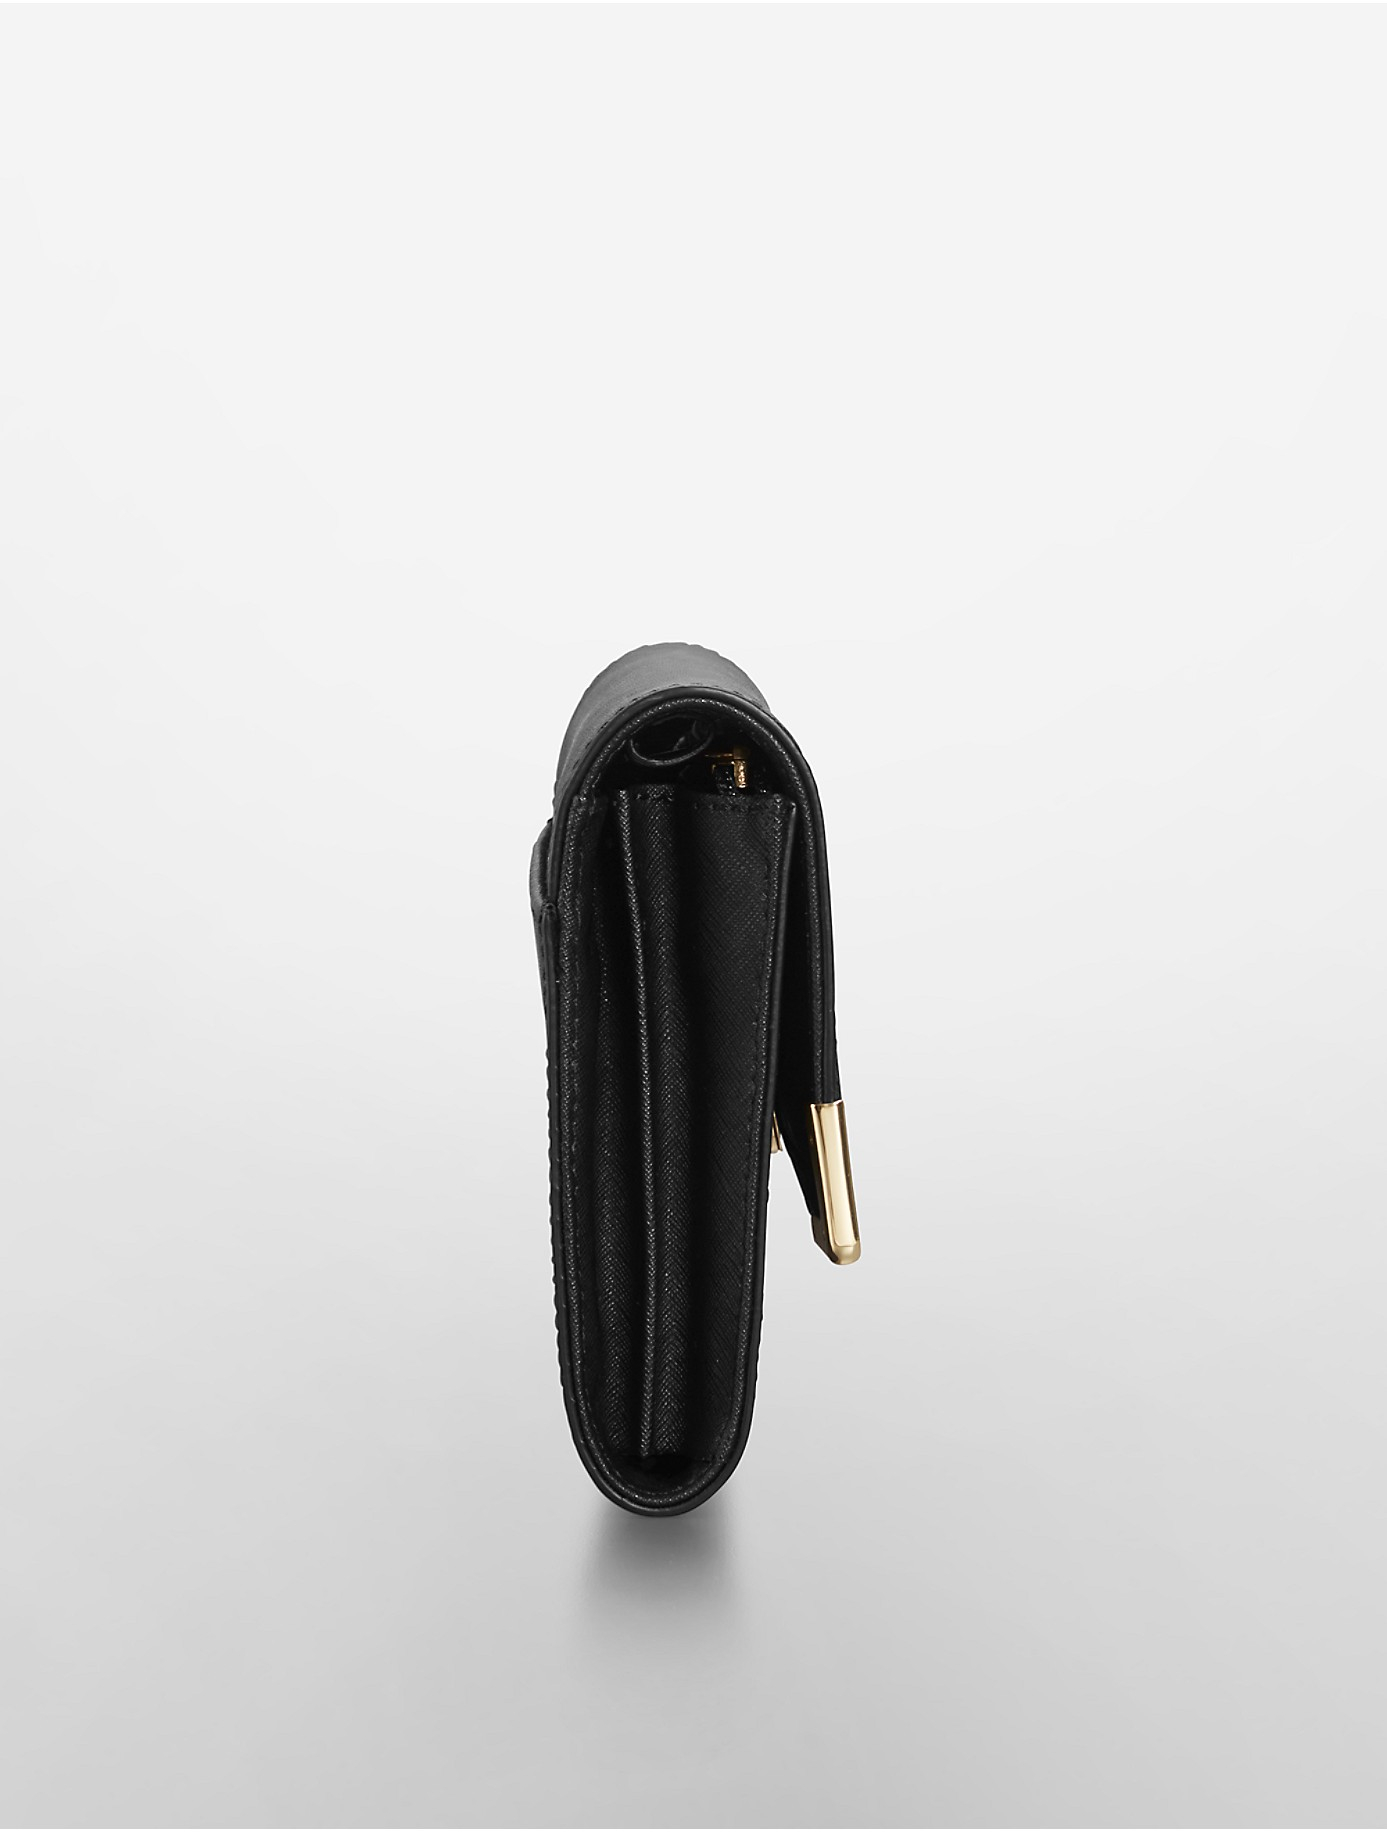 Calvin Klein Saffiano Leather Crossbody Bag in Black/Gold (Black) | Lyst